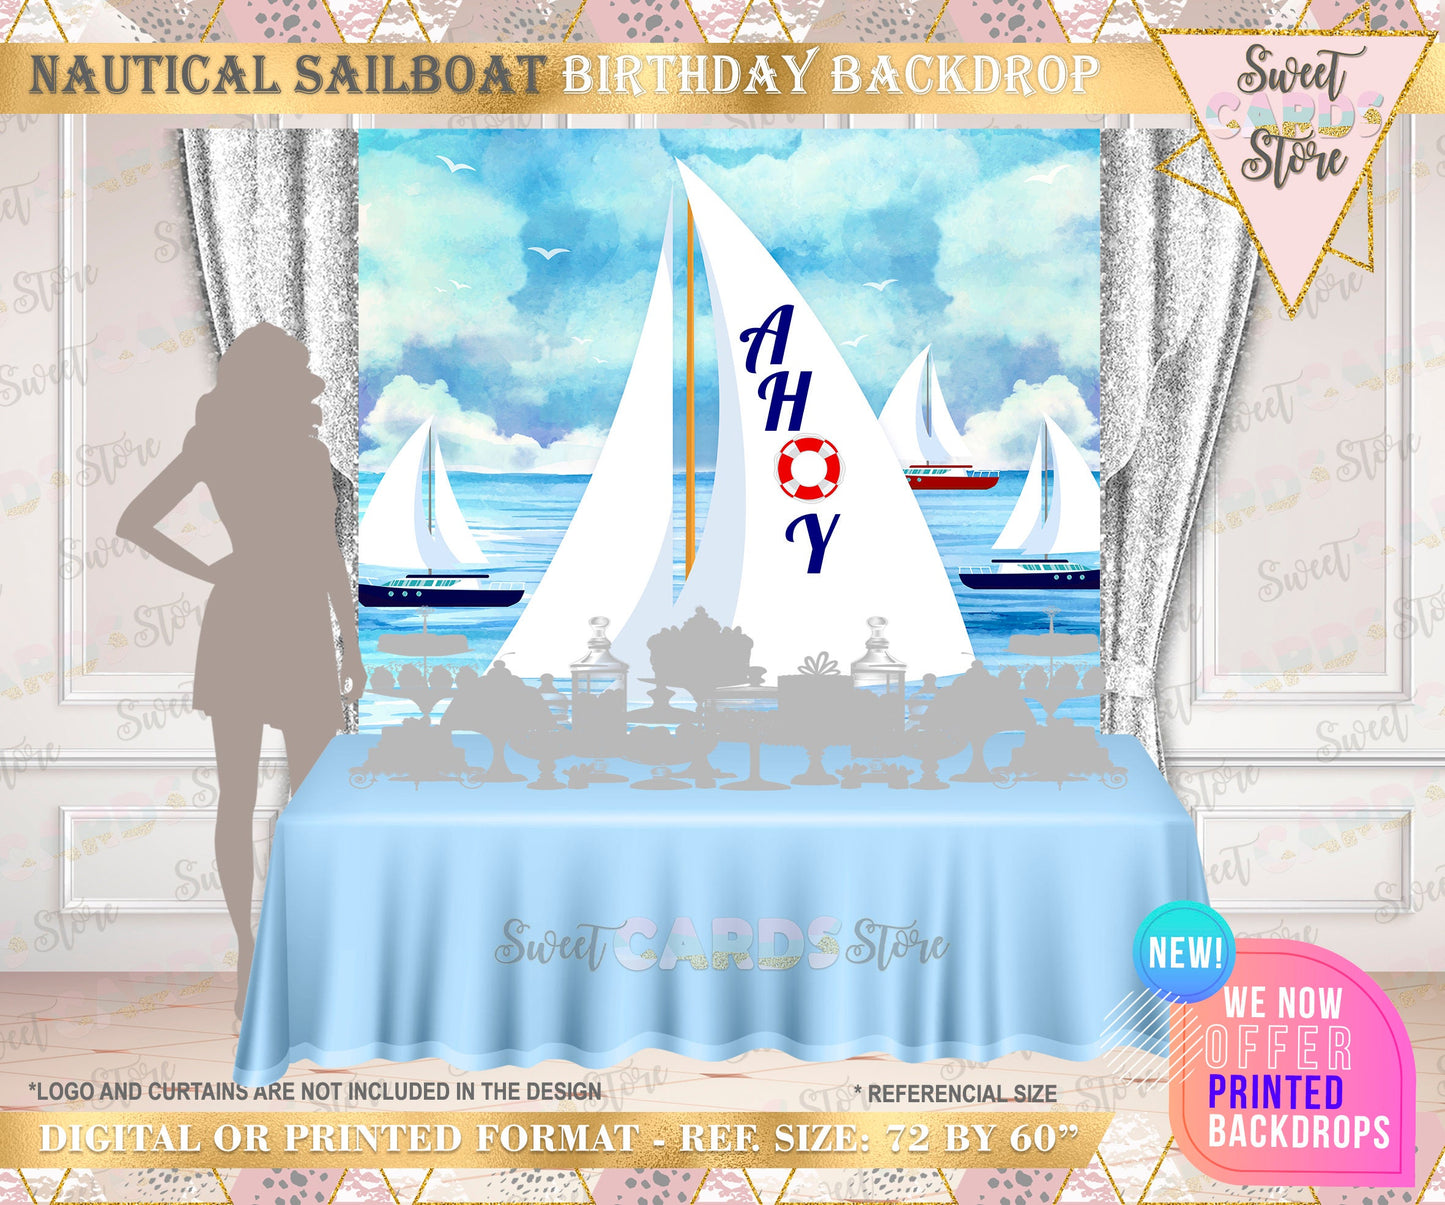 Nautical ahoy sail boat Backdrop, Under the sea sail boat Backdrop, Baby Shower nautical Theme party Backdrop, ahoy Nautical boat backdrop